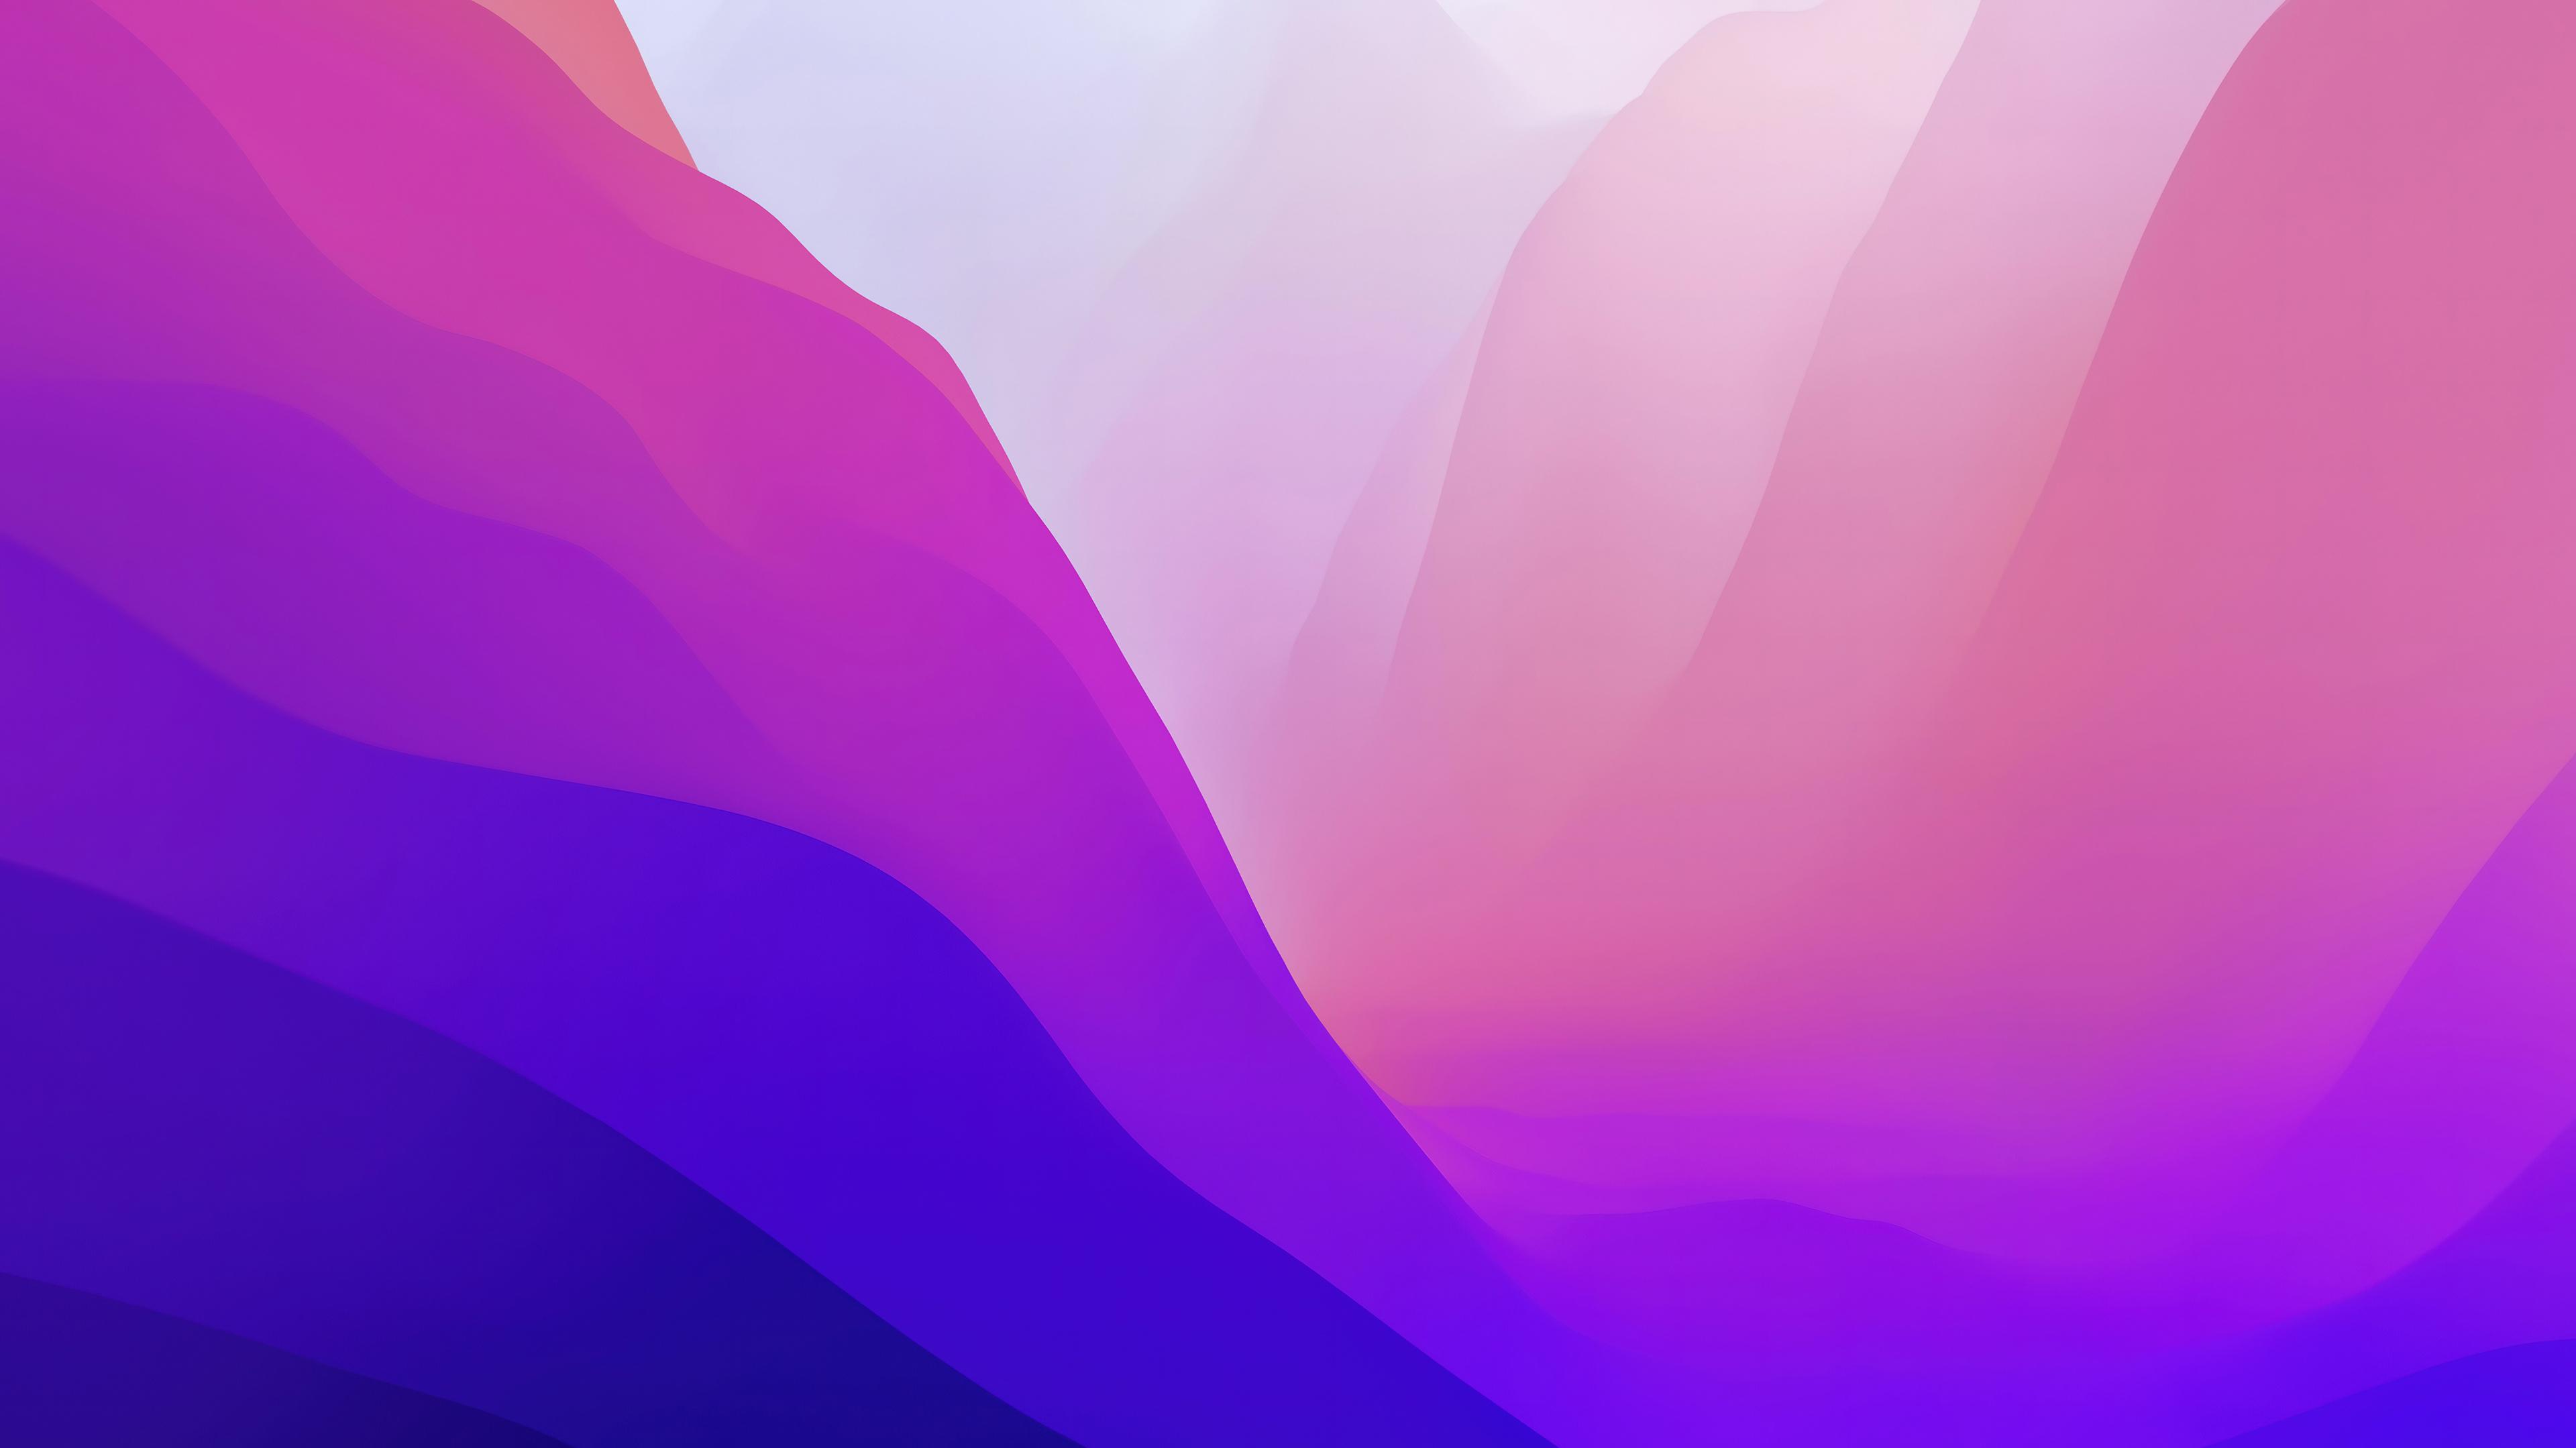 Macos Purple Abstract Background Wallpaper 4k Pc Desktop 190f